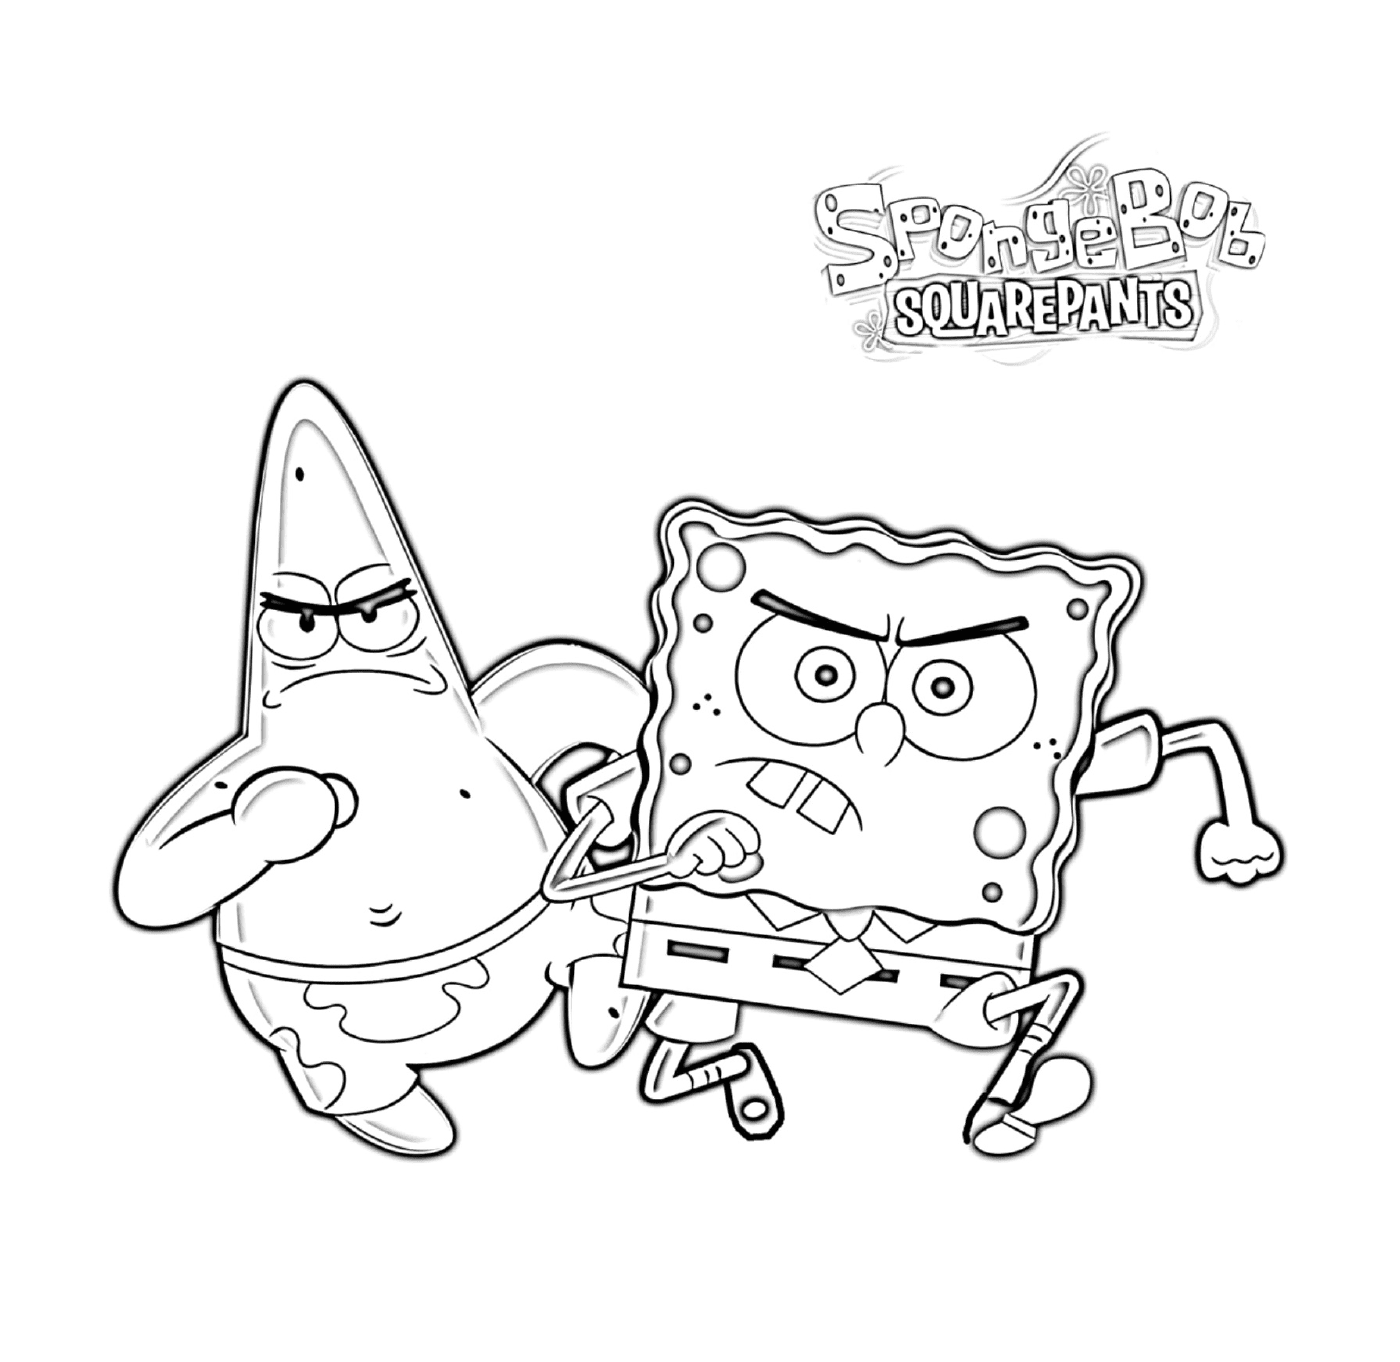  Spongebob e Patrick furiosi 